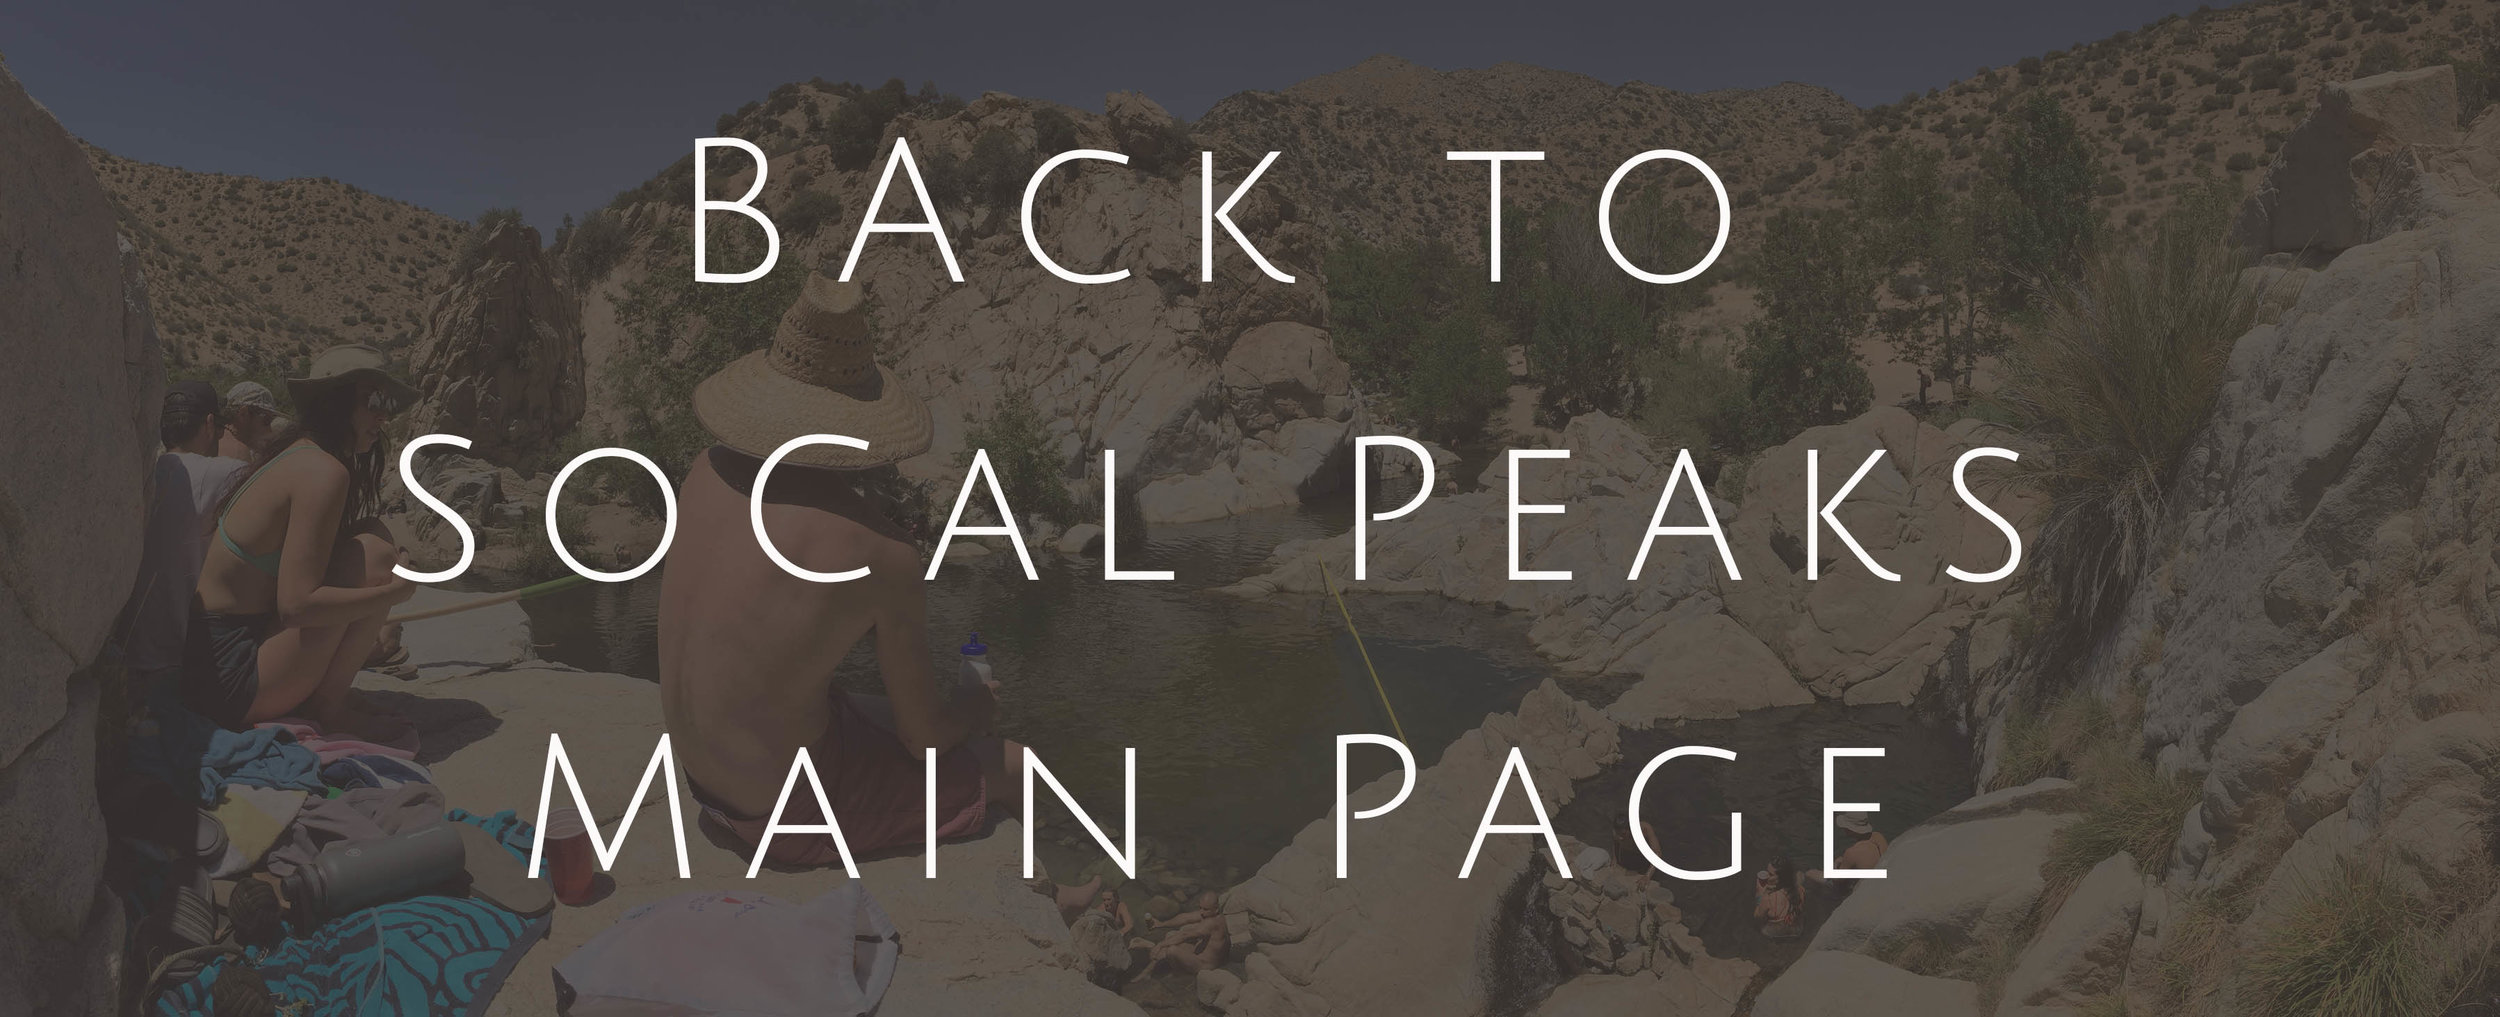 Back to SoCal Peaks Main Page 2.jpg